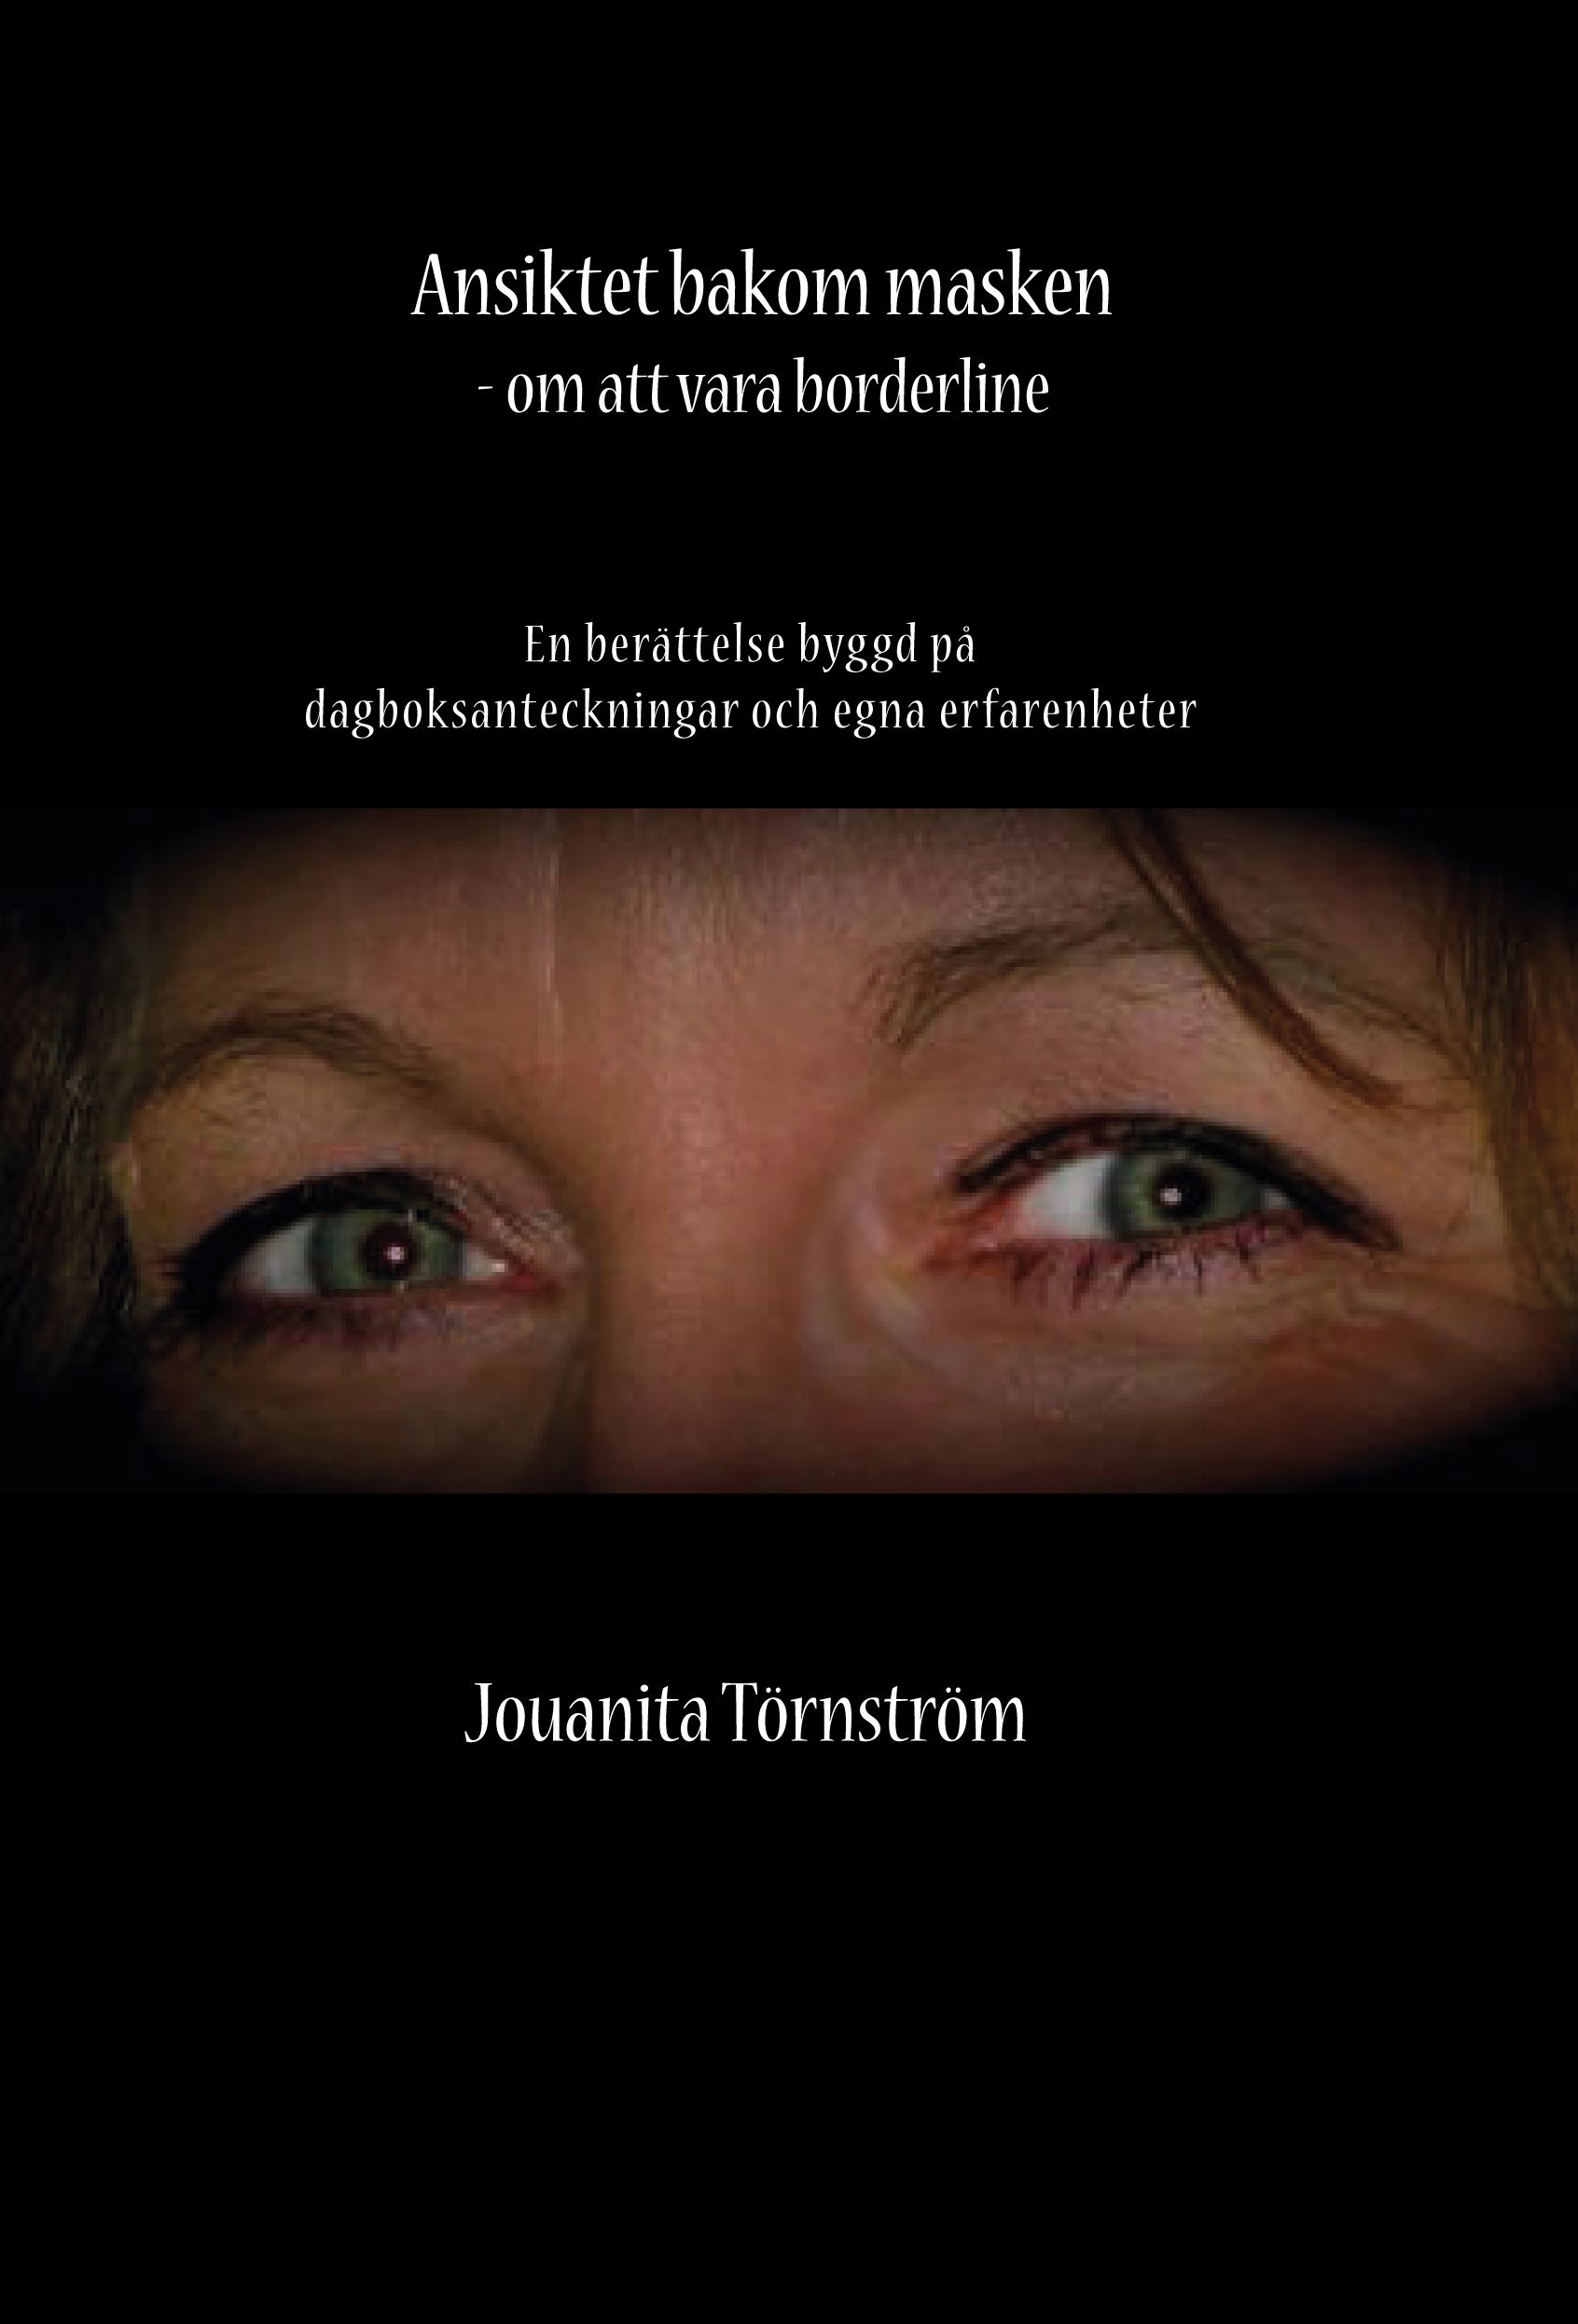 Ansiktet bakom masken, e-bok av Jouanita Törnström